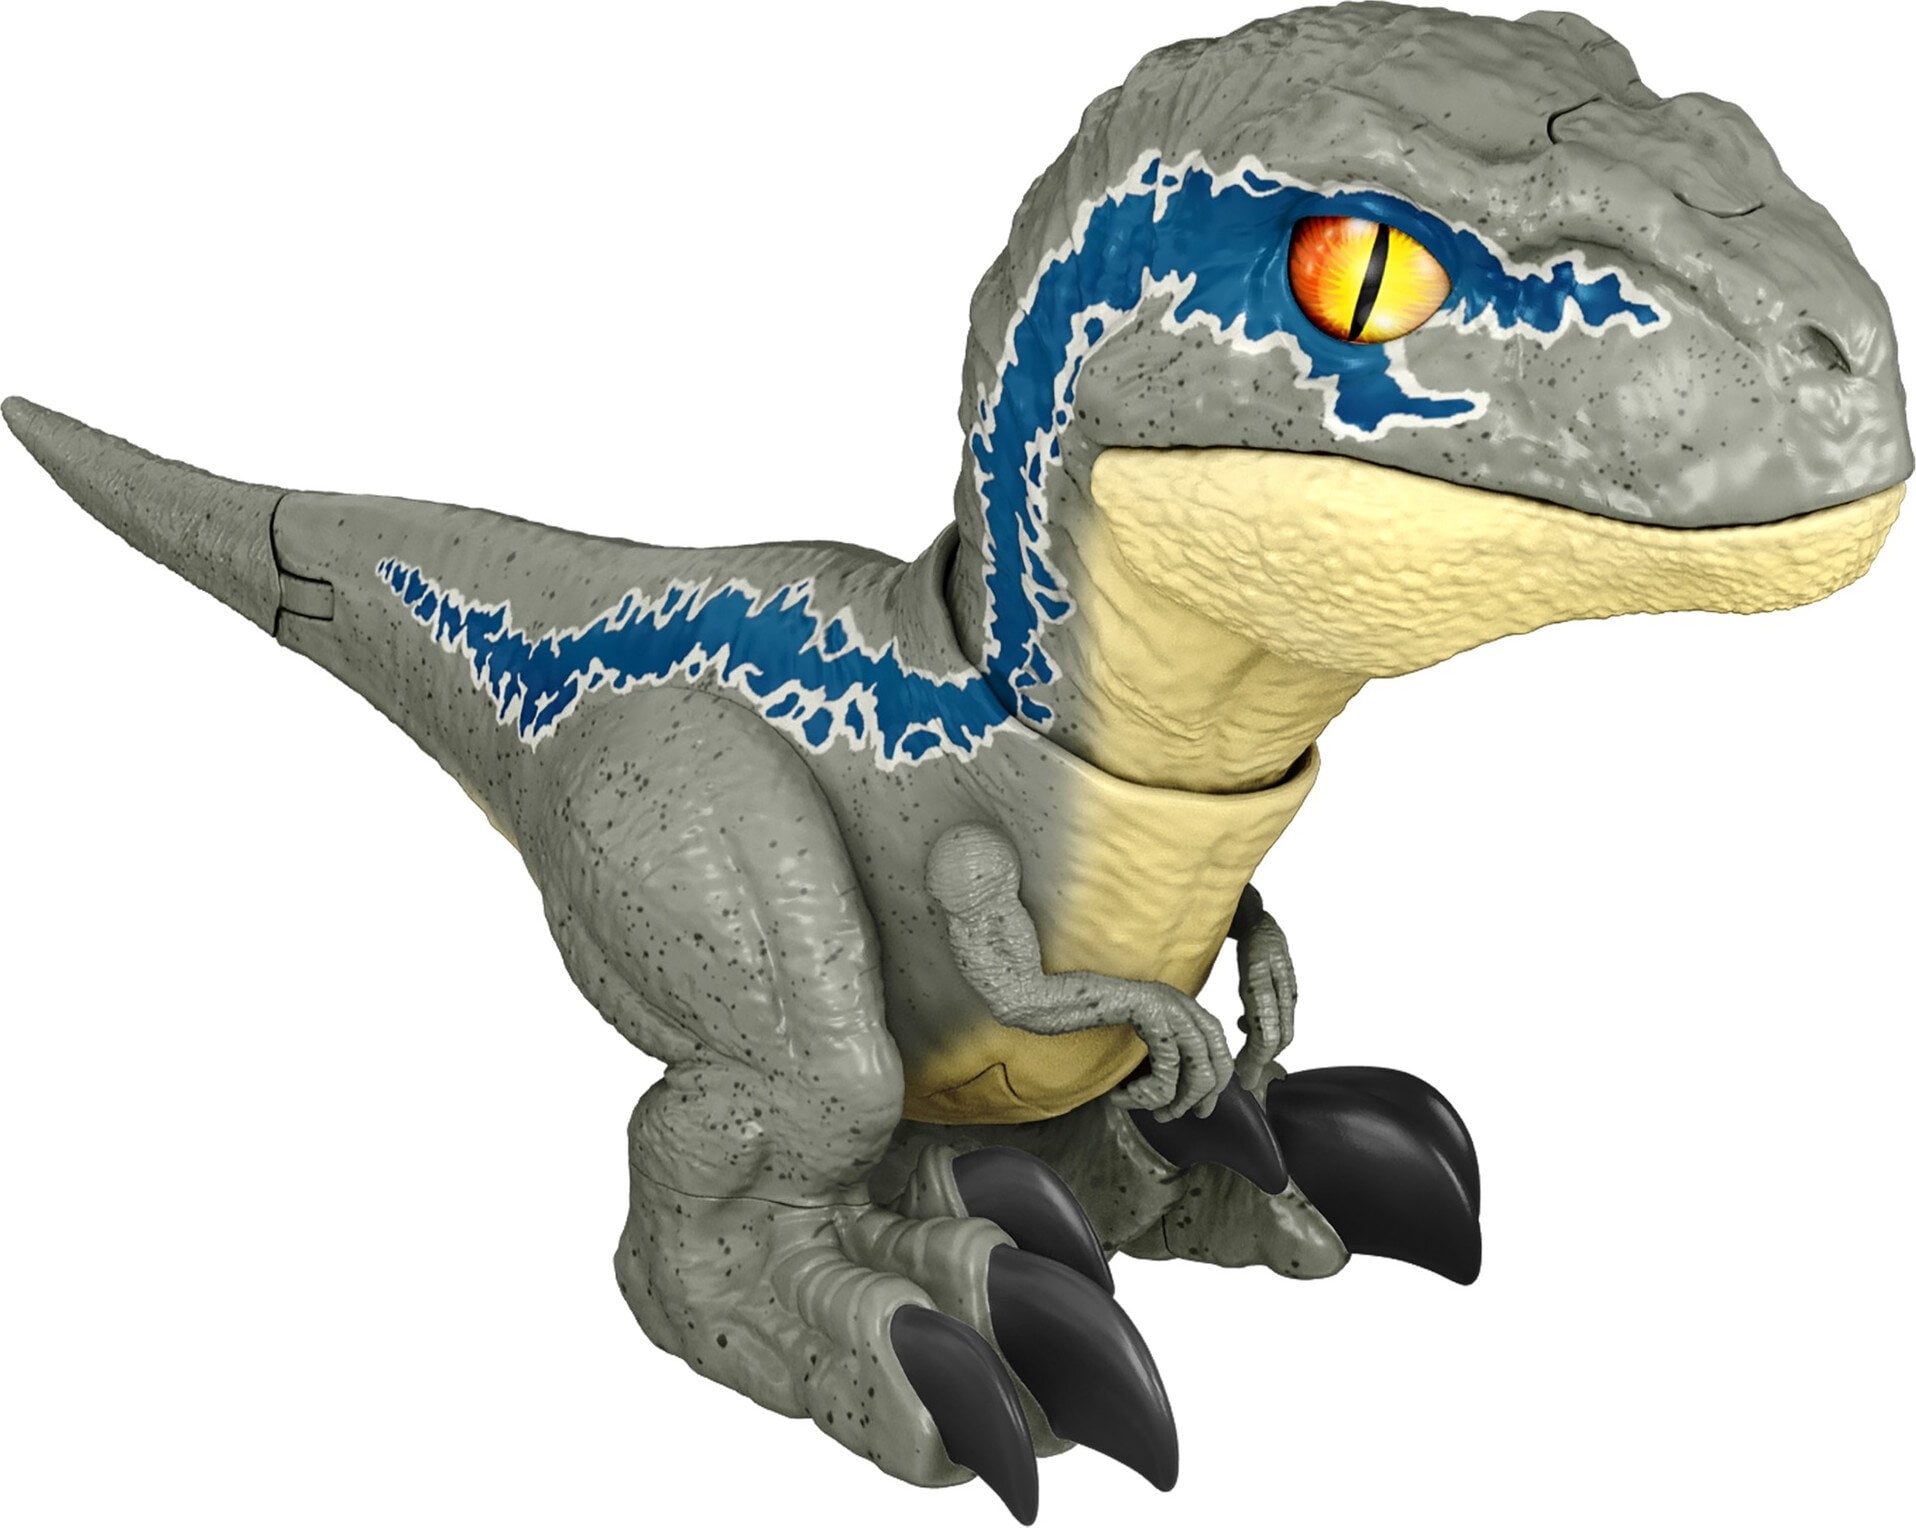 Jurassic World Dominion Uncaged Rowdy Roars Dinasaur Toy w/ Motion & Sounds: Velociraptor $4.65, Dilophosaurus $4.70 + Free S&H w/ Walmart+ or $35+